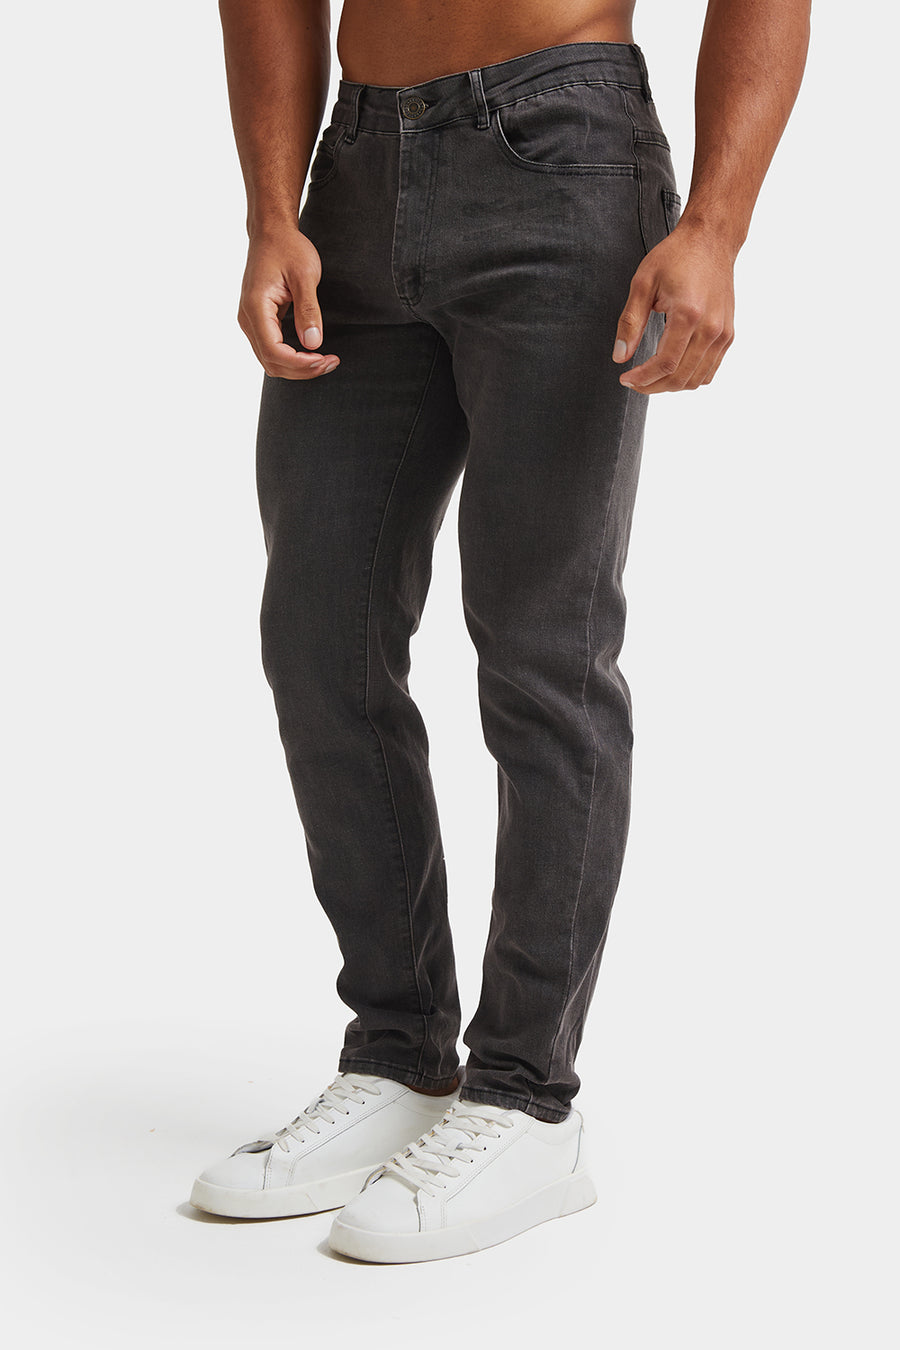 GAP Mens Essential Skinny Fit Khakis, Iconic Khaki, 34W x 30L US at   Men's Clothing store